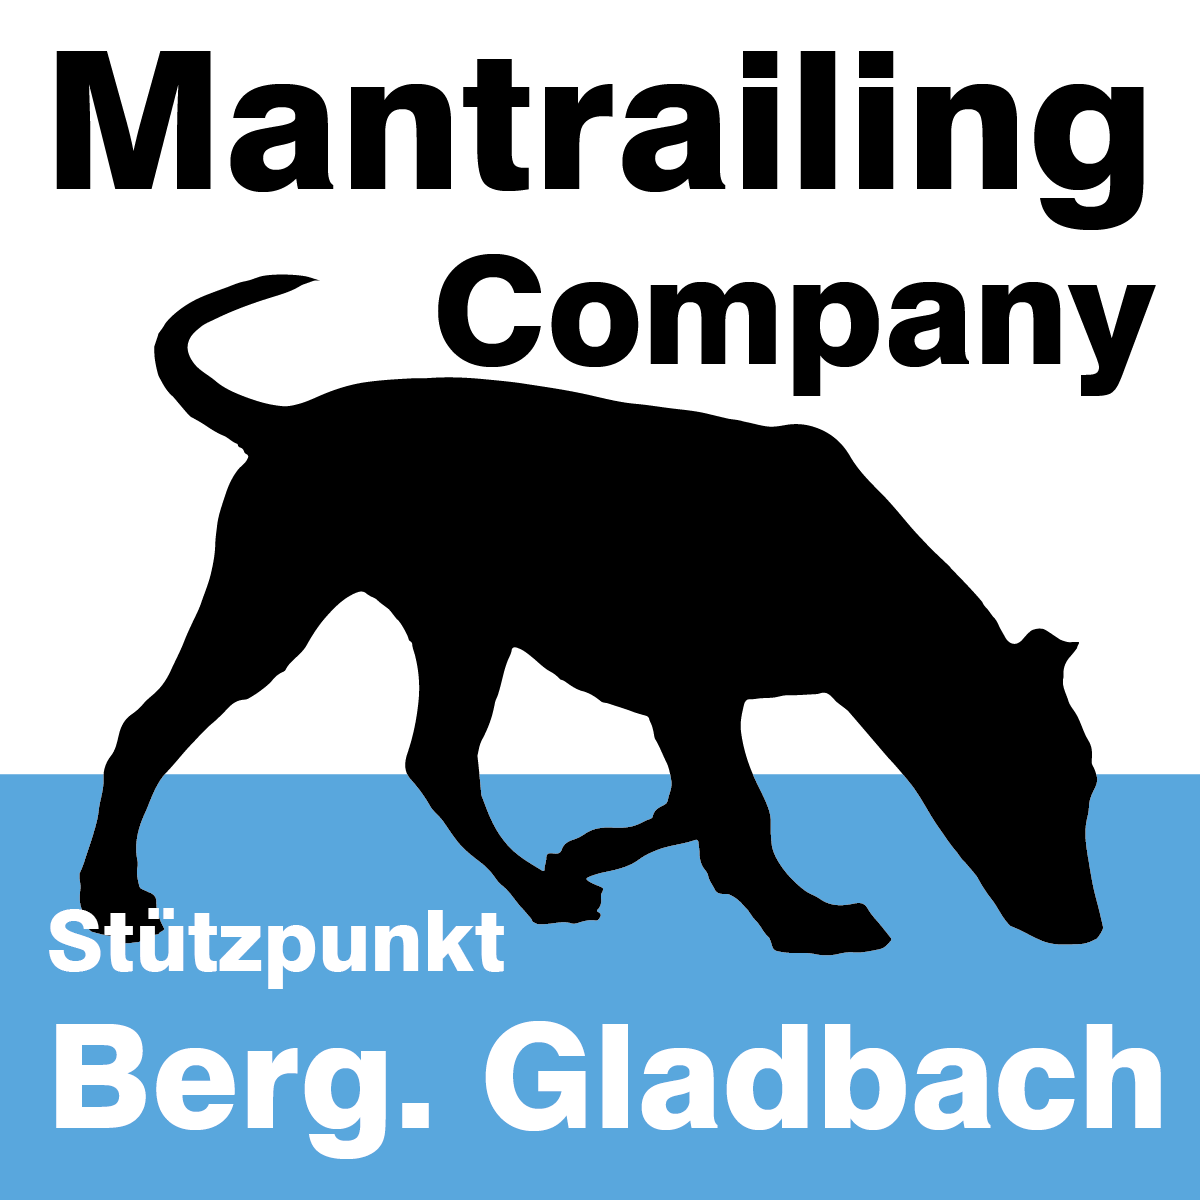 Mantrailing Company Logo Bergisch Gladbach 1200